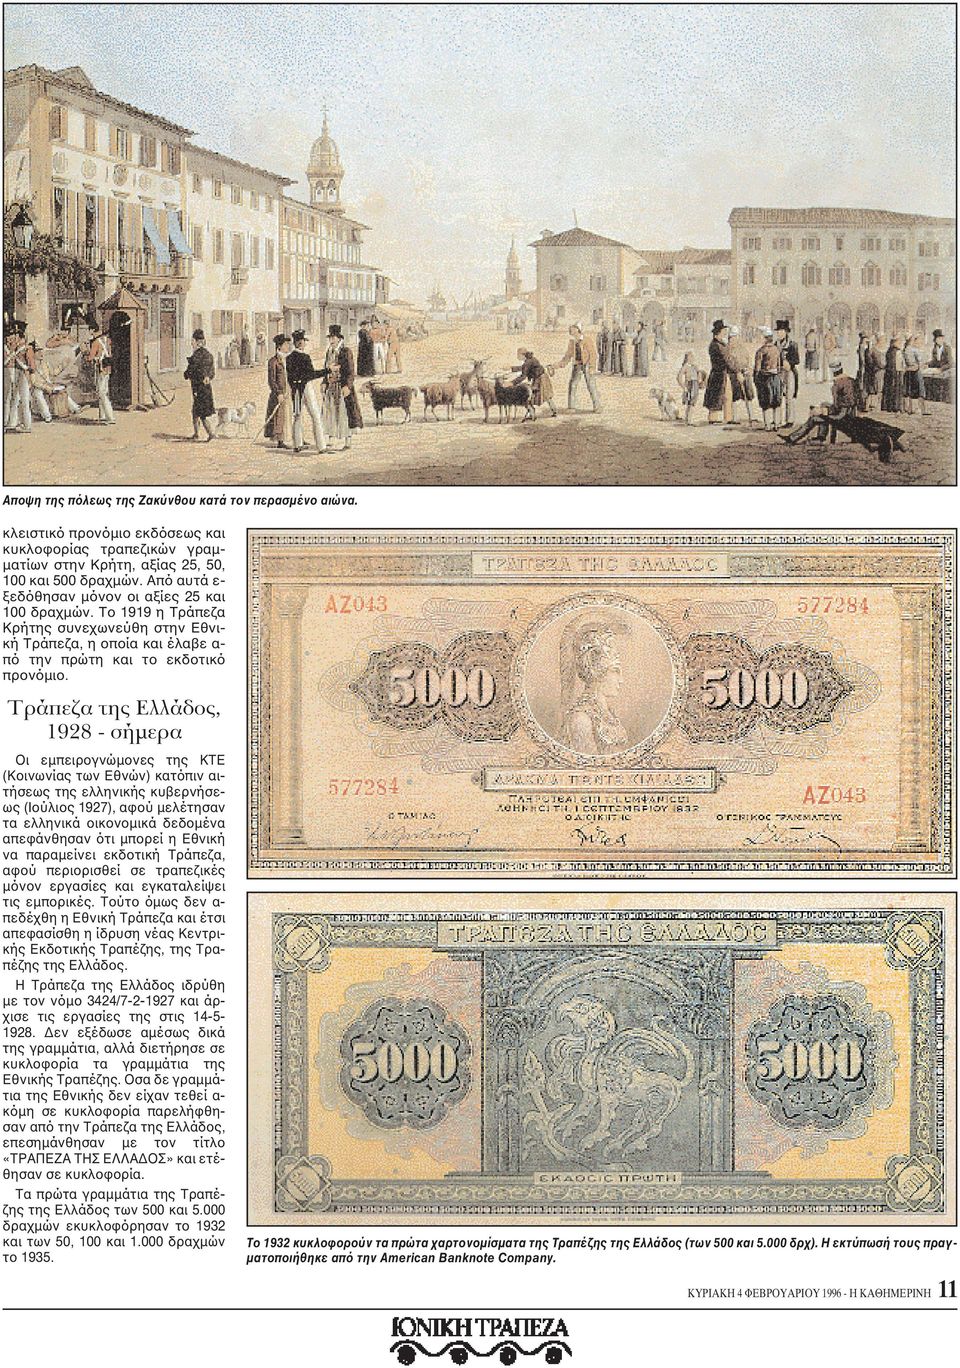 Tράπεζα της Eλλάδος, 1928 - σήμερα Oι εμπειρογνώμονες της KTE (Kοινωνίας των Eθνών) κατόπιν αιτήσεως της ελληνικής κυβερνήσεως (Iούλιος 1927), αφού μελέτησαν τα ελληνικά οικονομικά δεδομένα